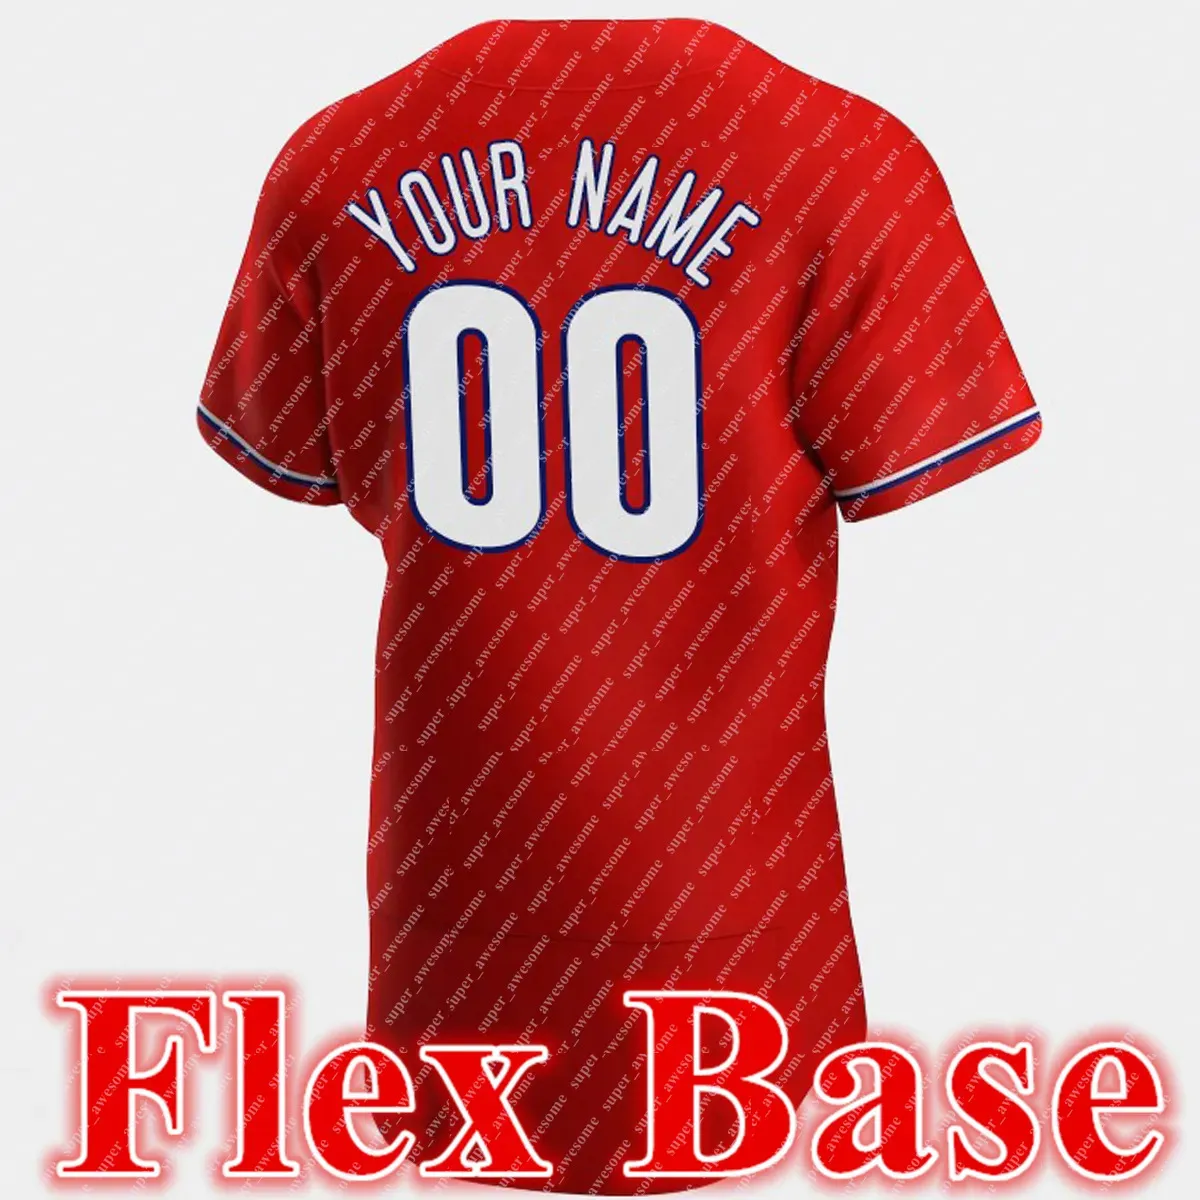 Red flexbase